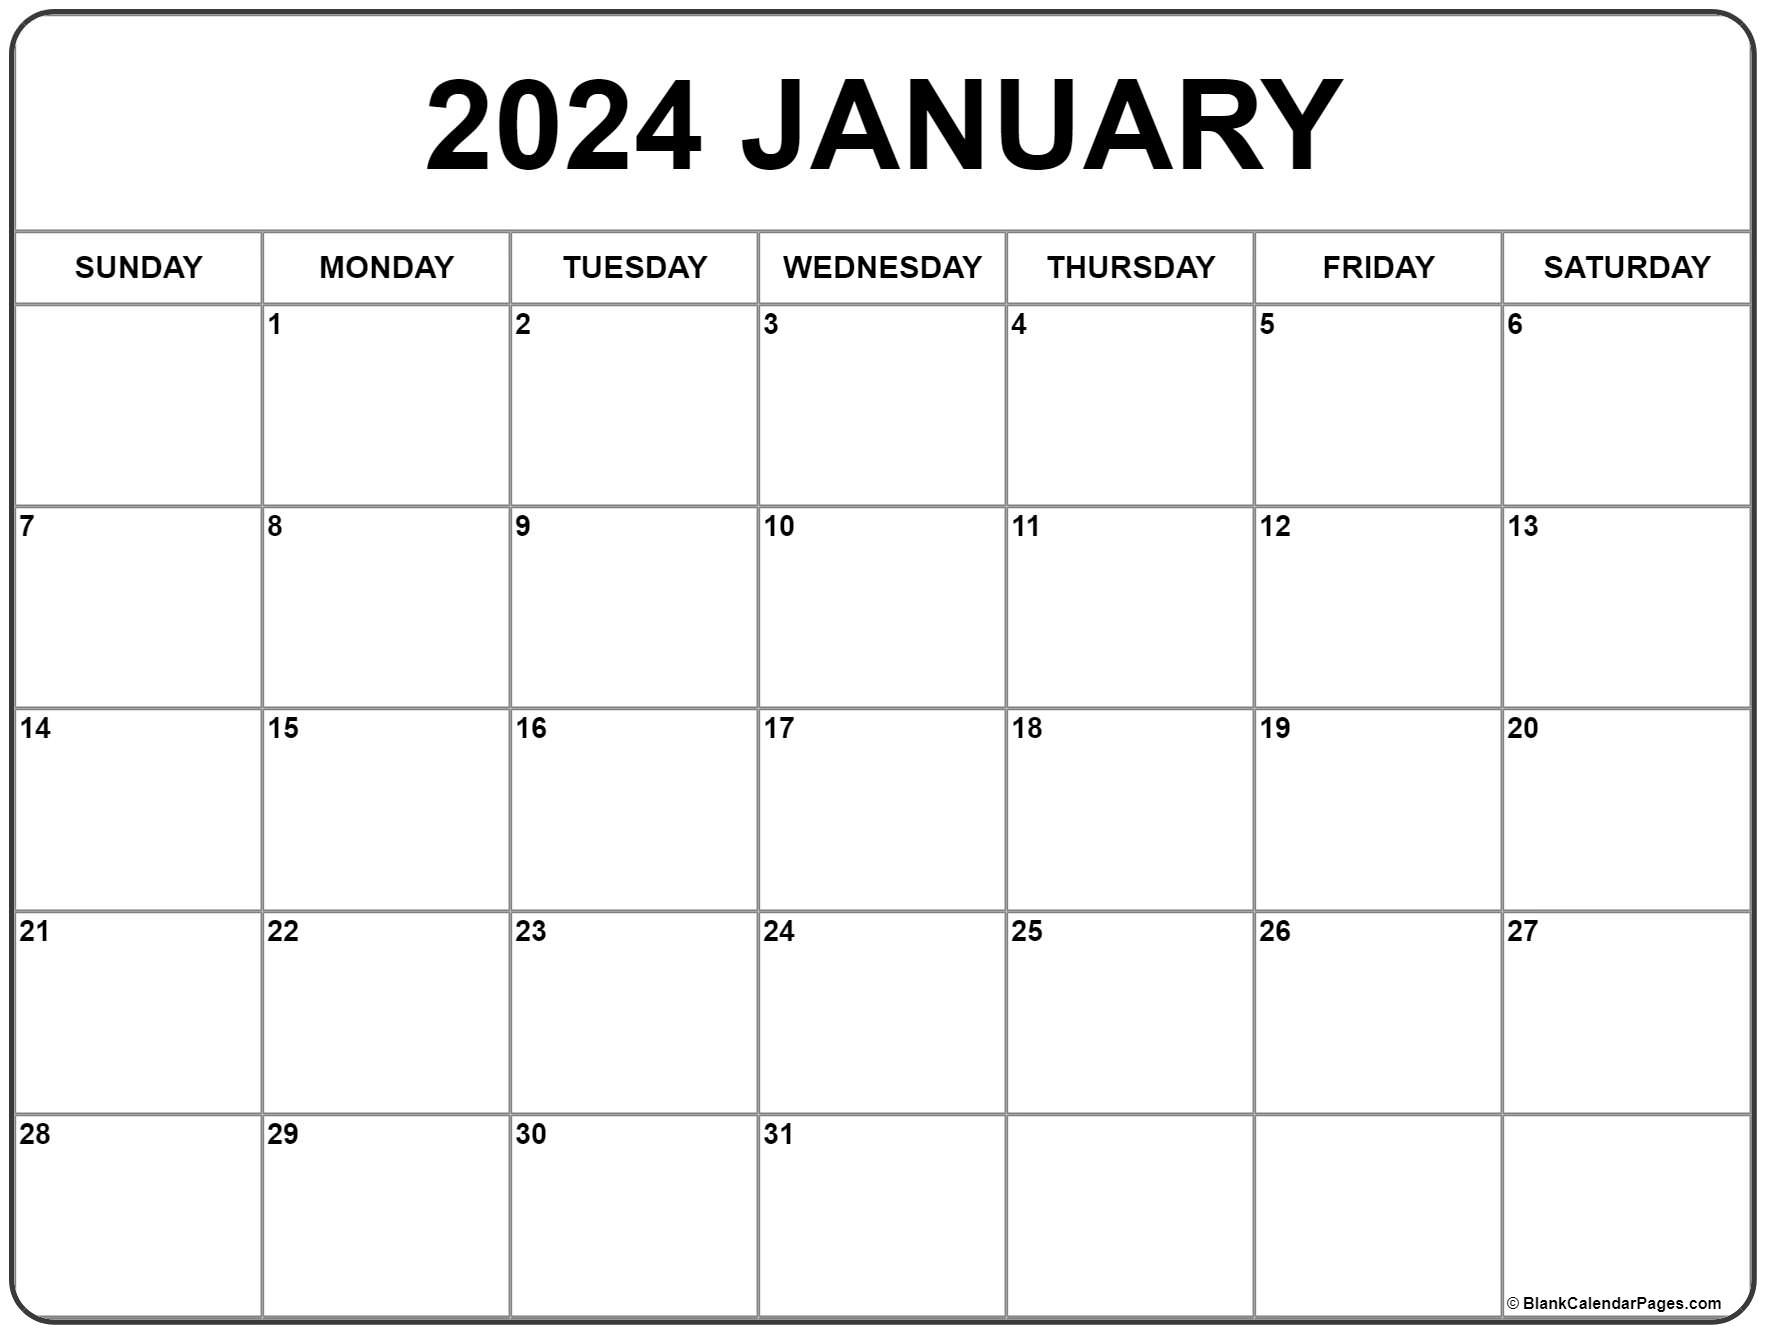 January 2024 Calendar | Free Printable Calendar for Monthly Calendar 2024 Calendar Printable